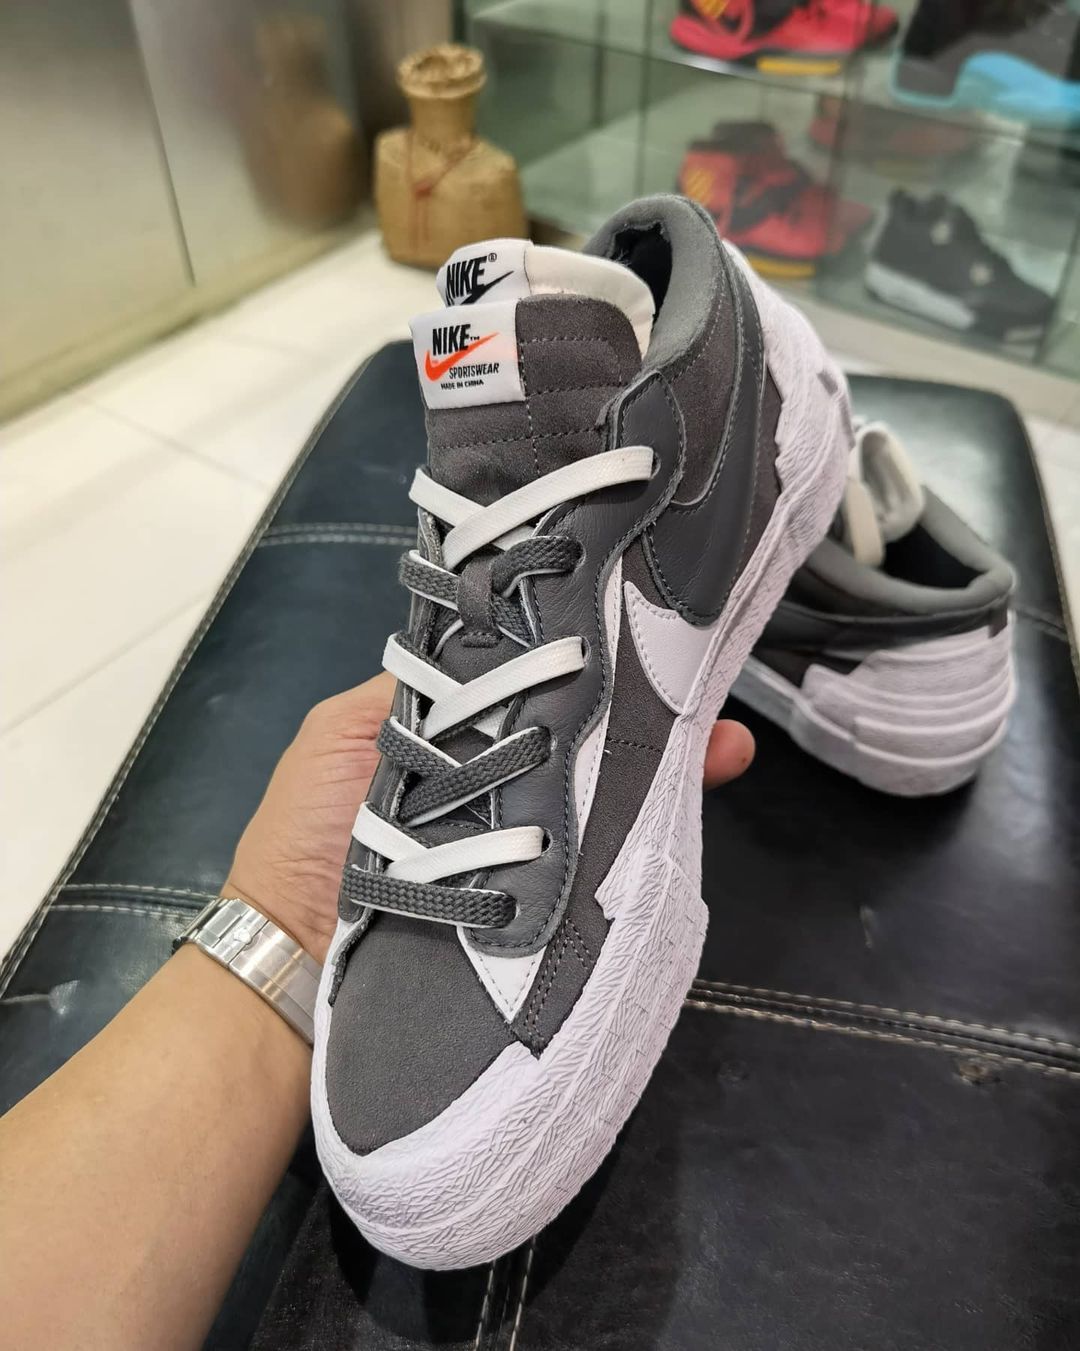 The Sacai x Nike Blazer Low Surfaces in “Iron Grey”